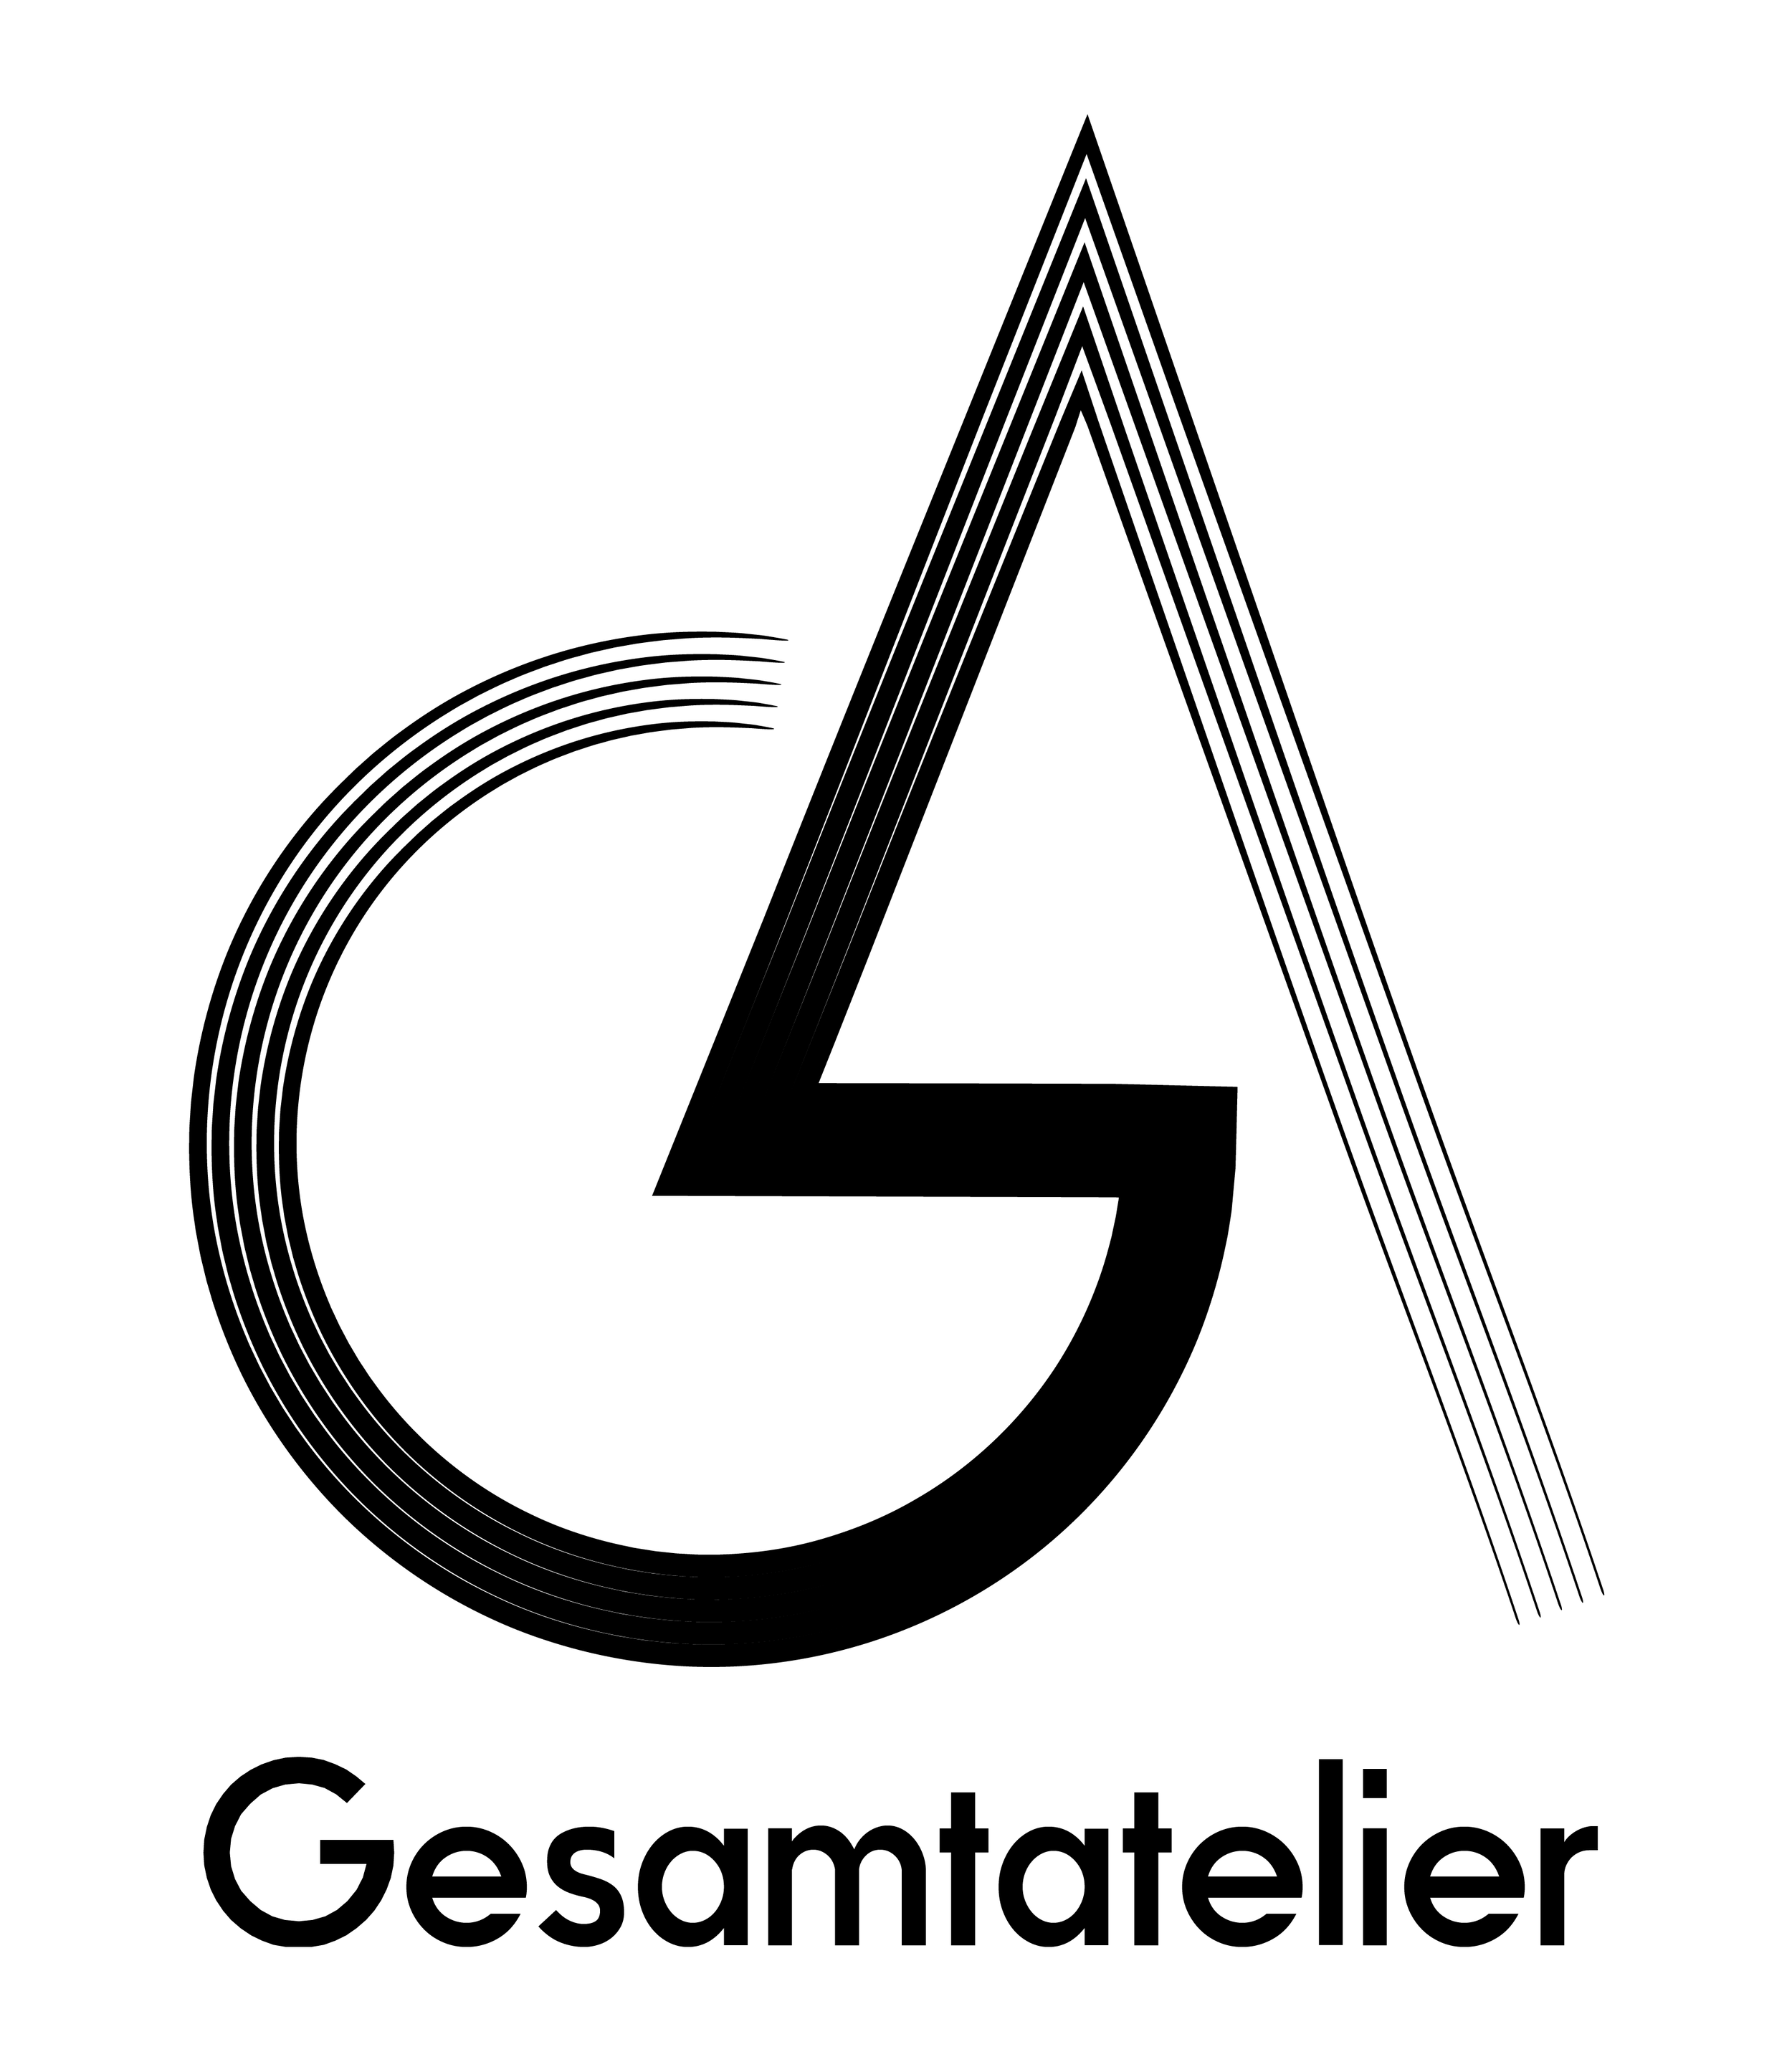 Gesamtatelier_Logo_Text_white.png